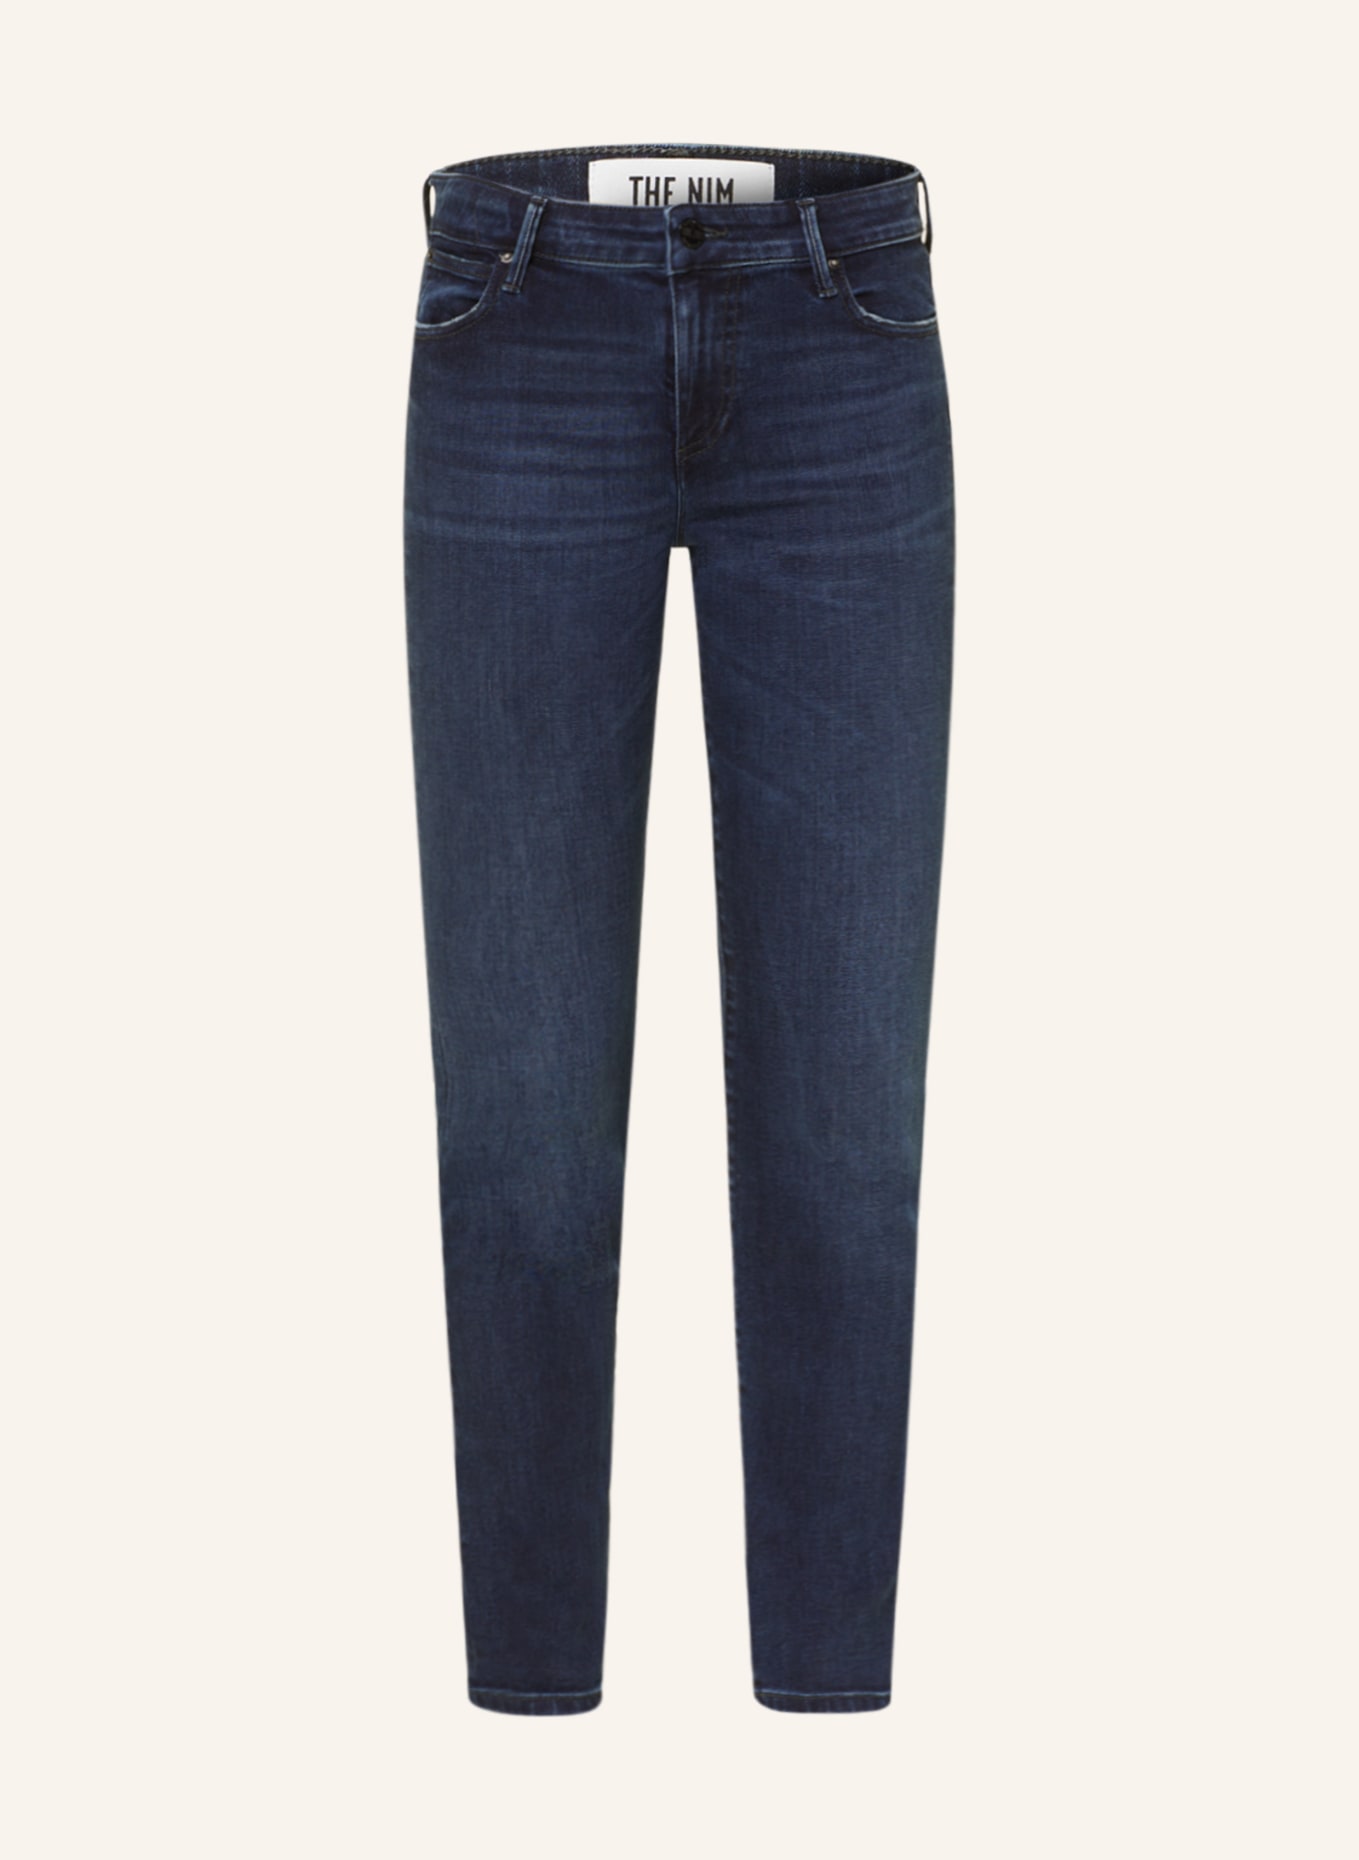 THE.NIM STANDARD Skinny Jeans HOLLY, Farbe: W793-INB DARK WASHED BLUE (Bild 1)